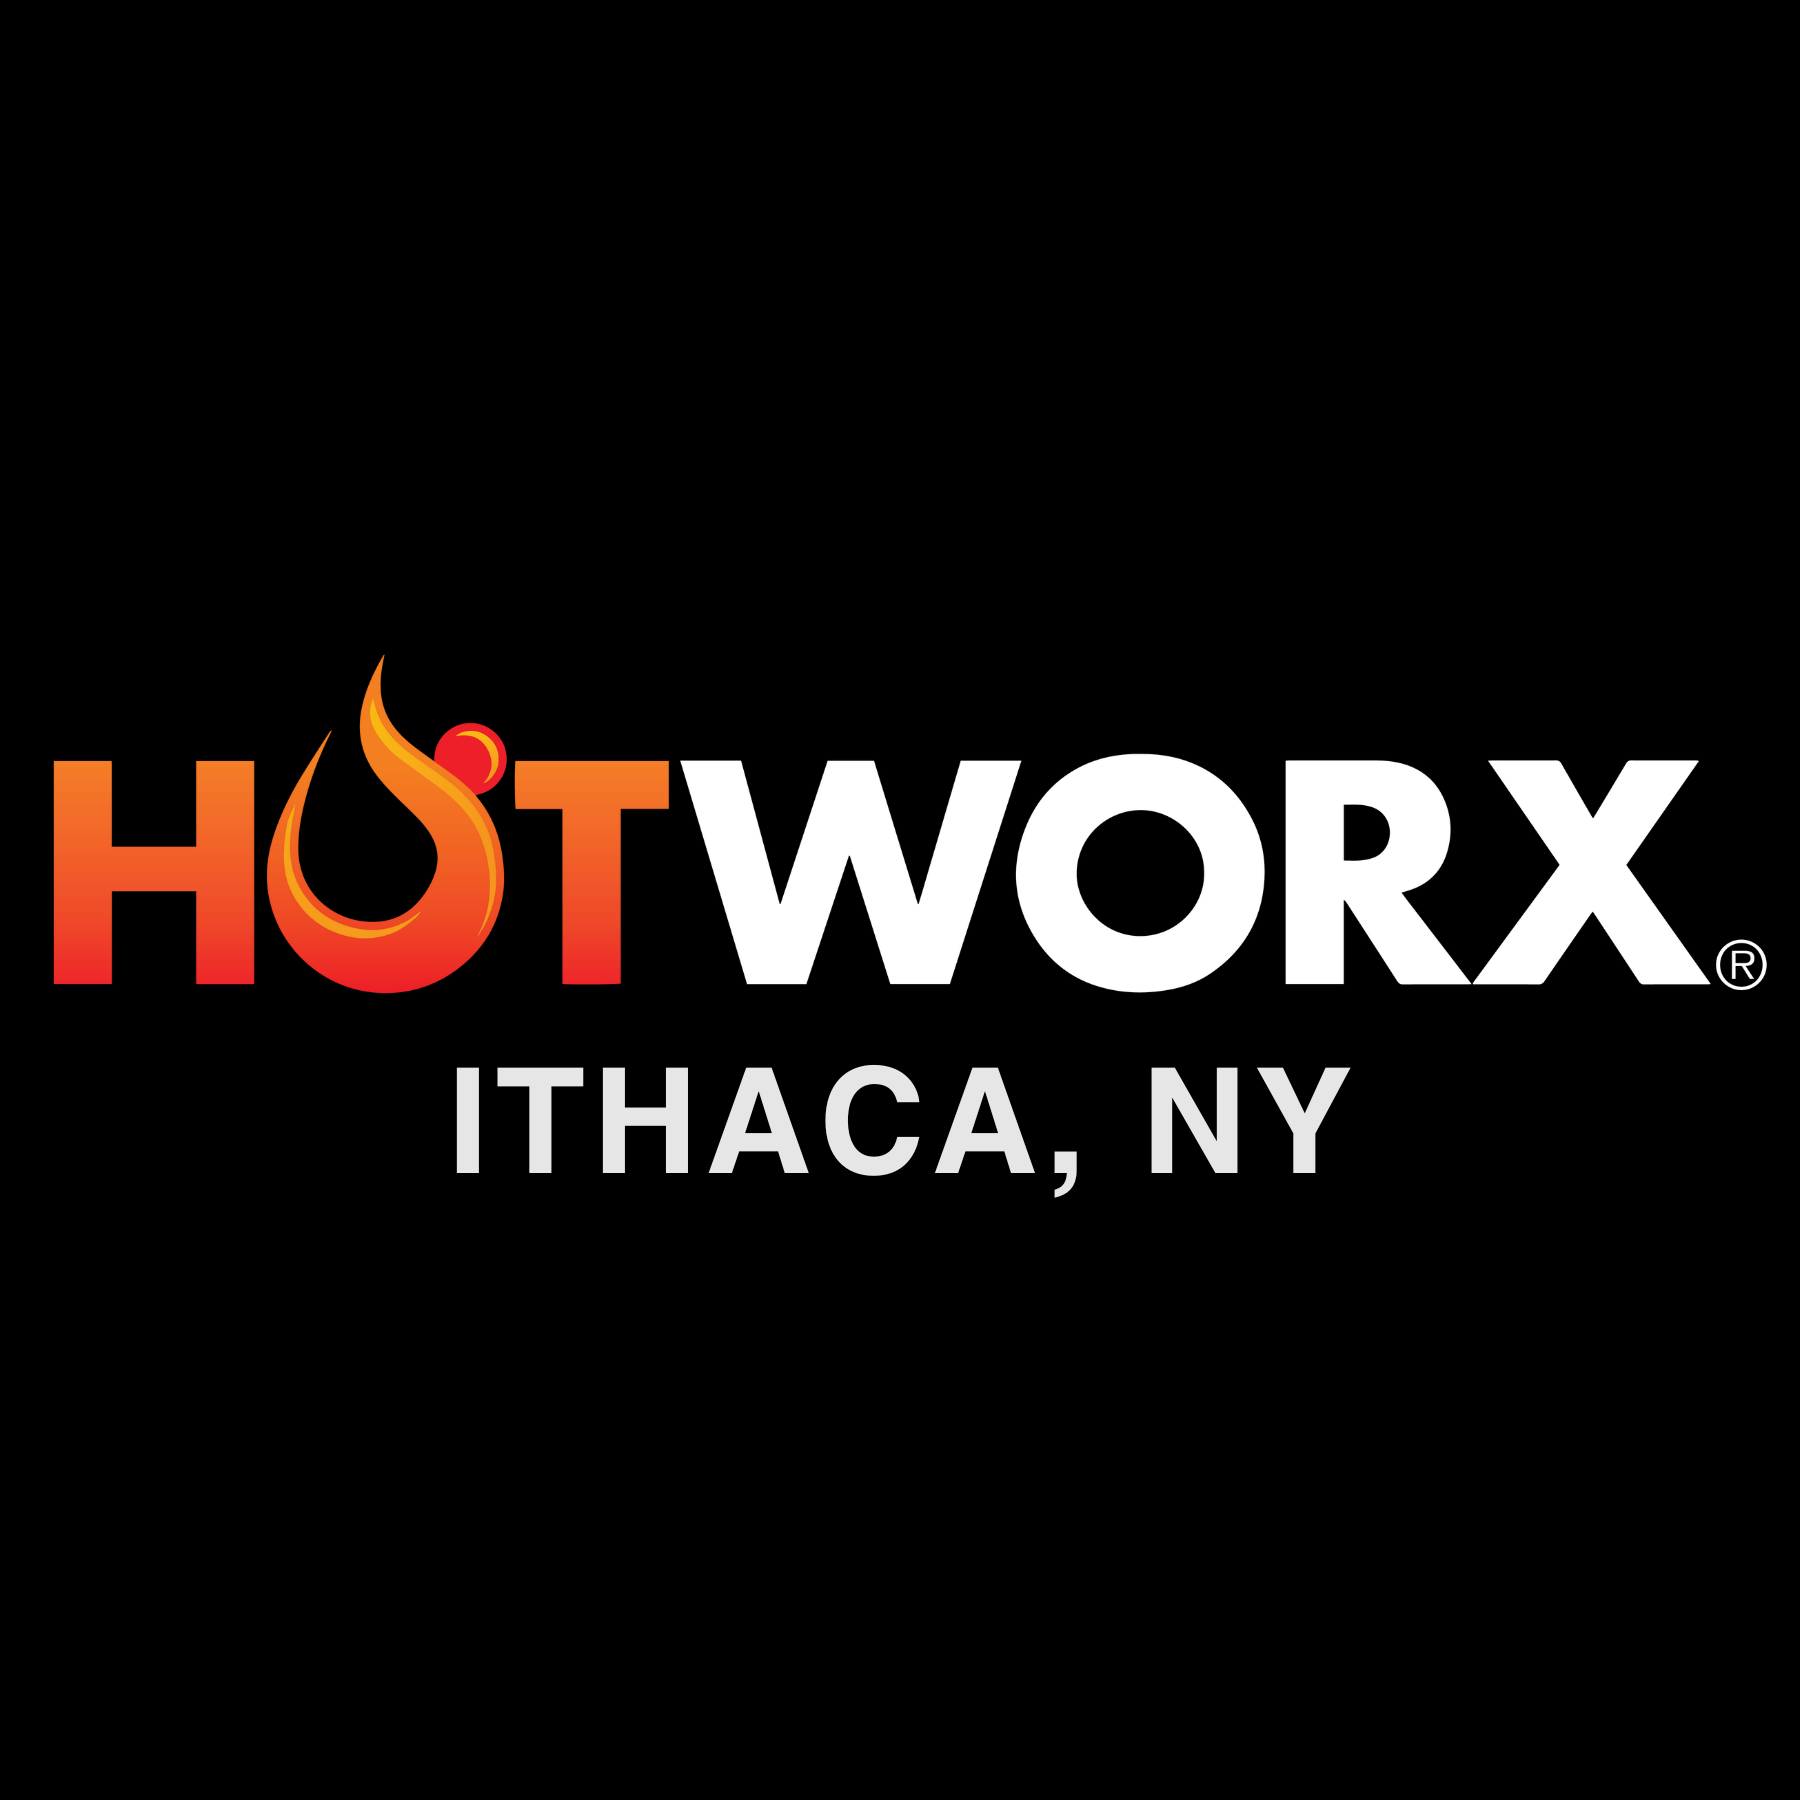 Memphis Entrepreneur Brings HOTWORX Franchise to Ithaca, NY